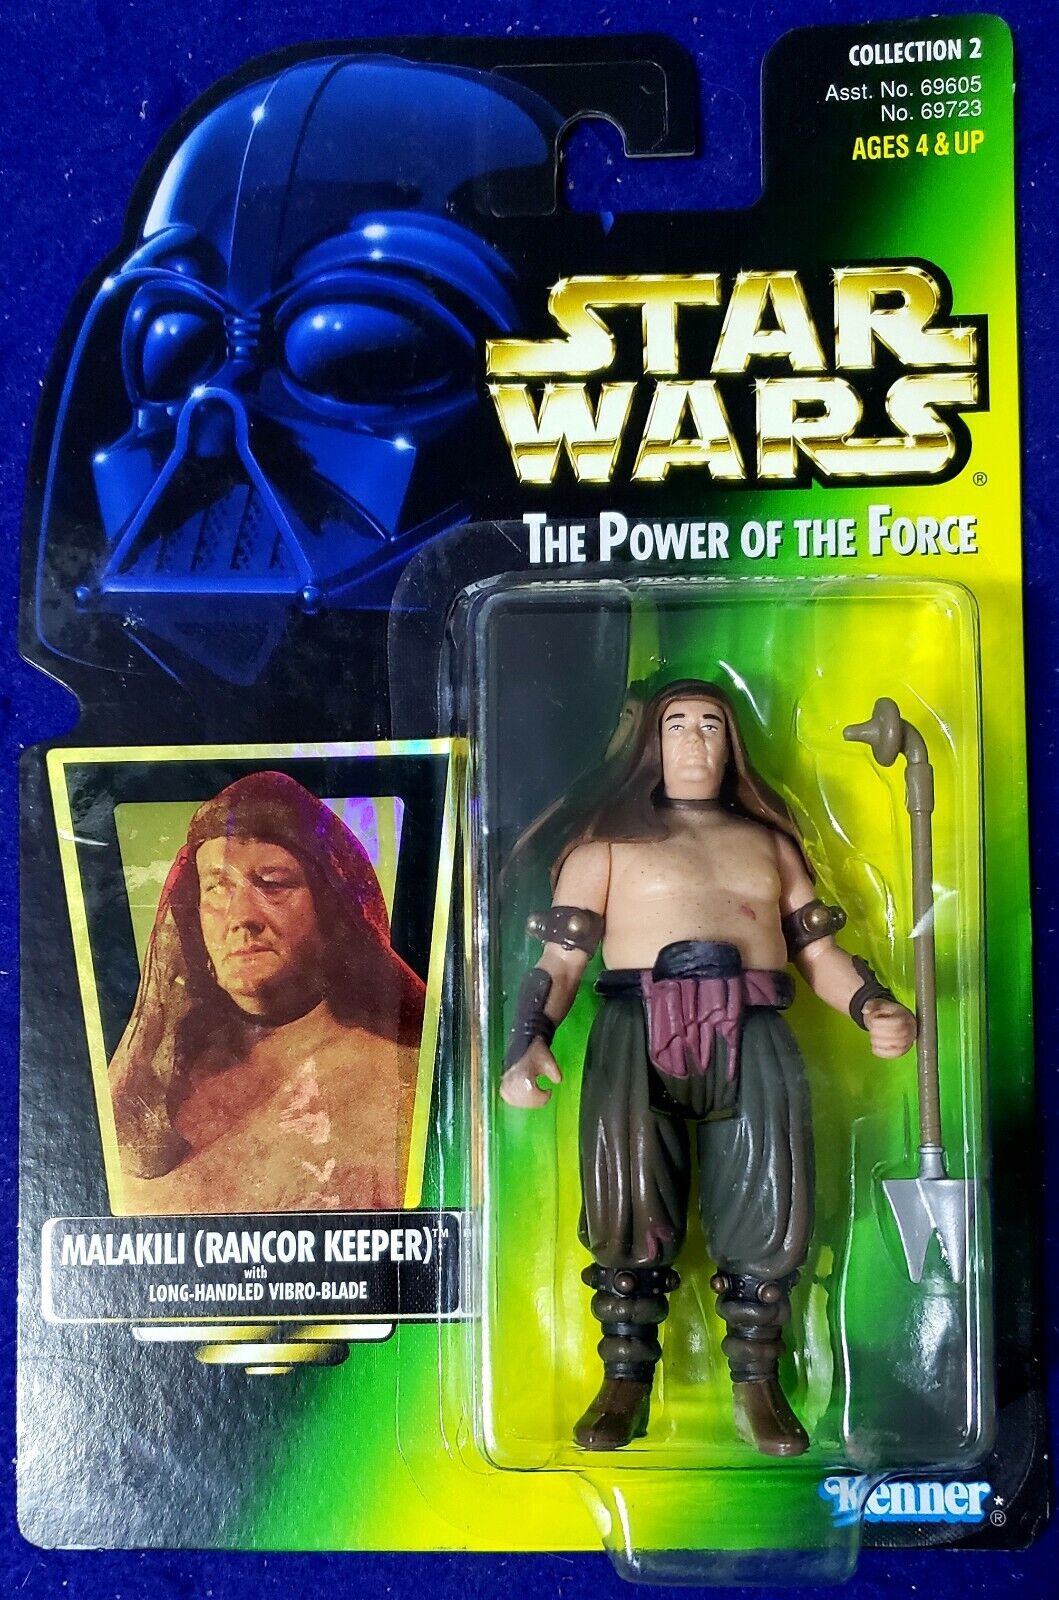 Holo Kenner Star Wars 1997 Power Of The Force MALAKILI (RANCOR KEEPER) MOC MIB